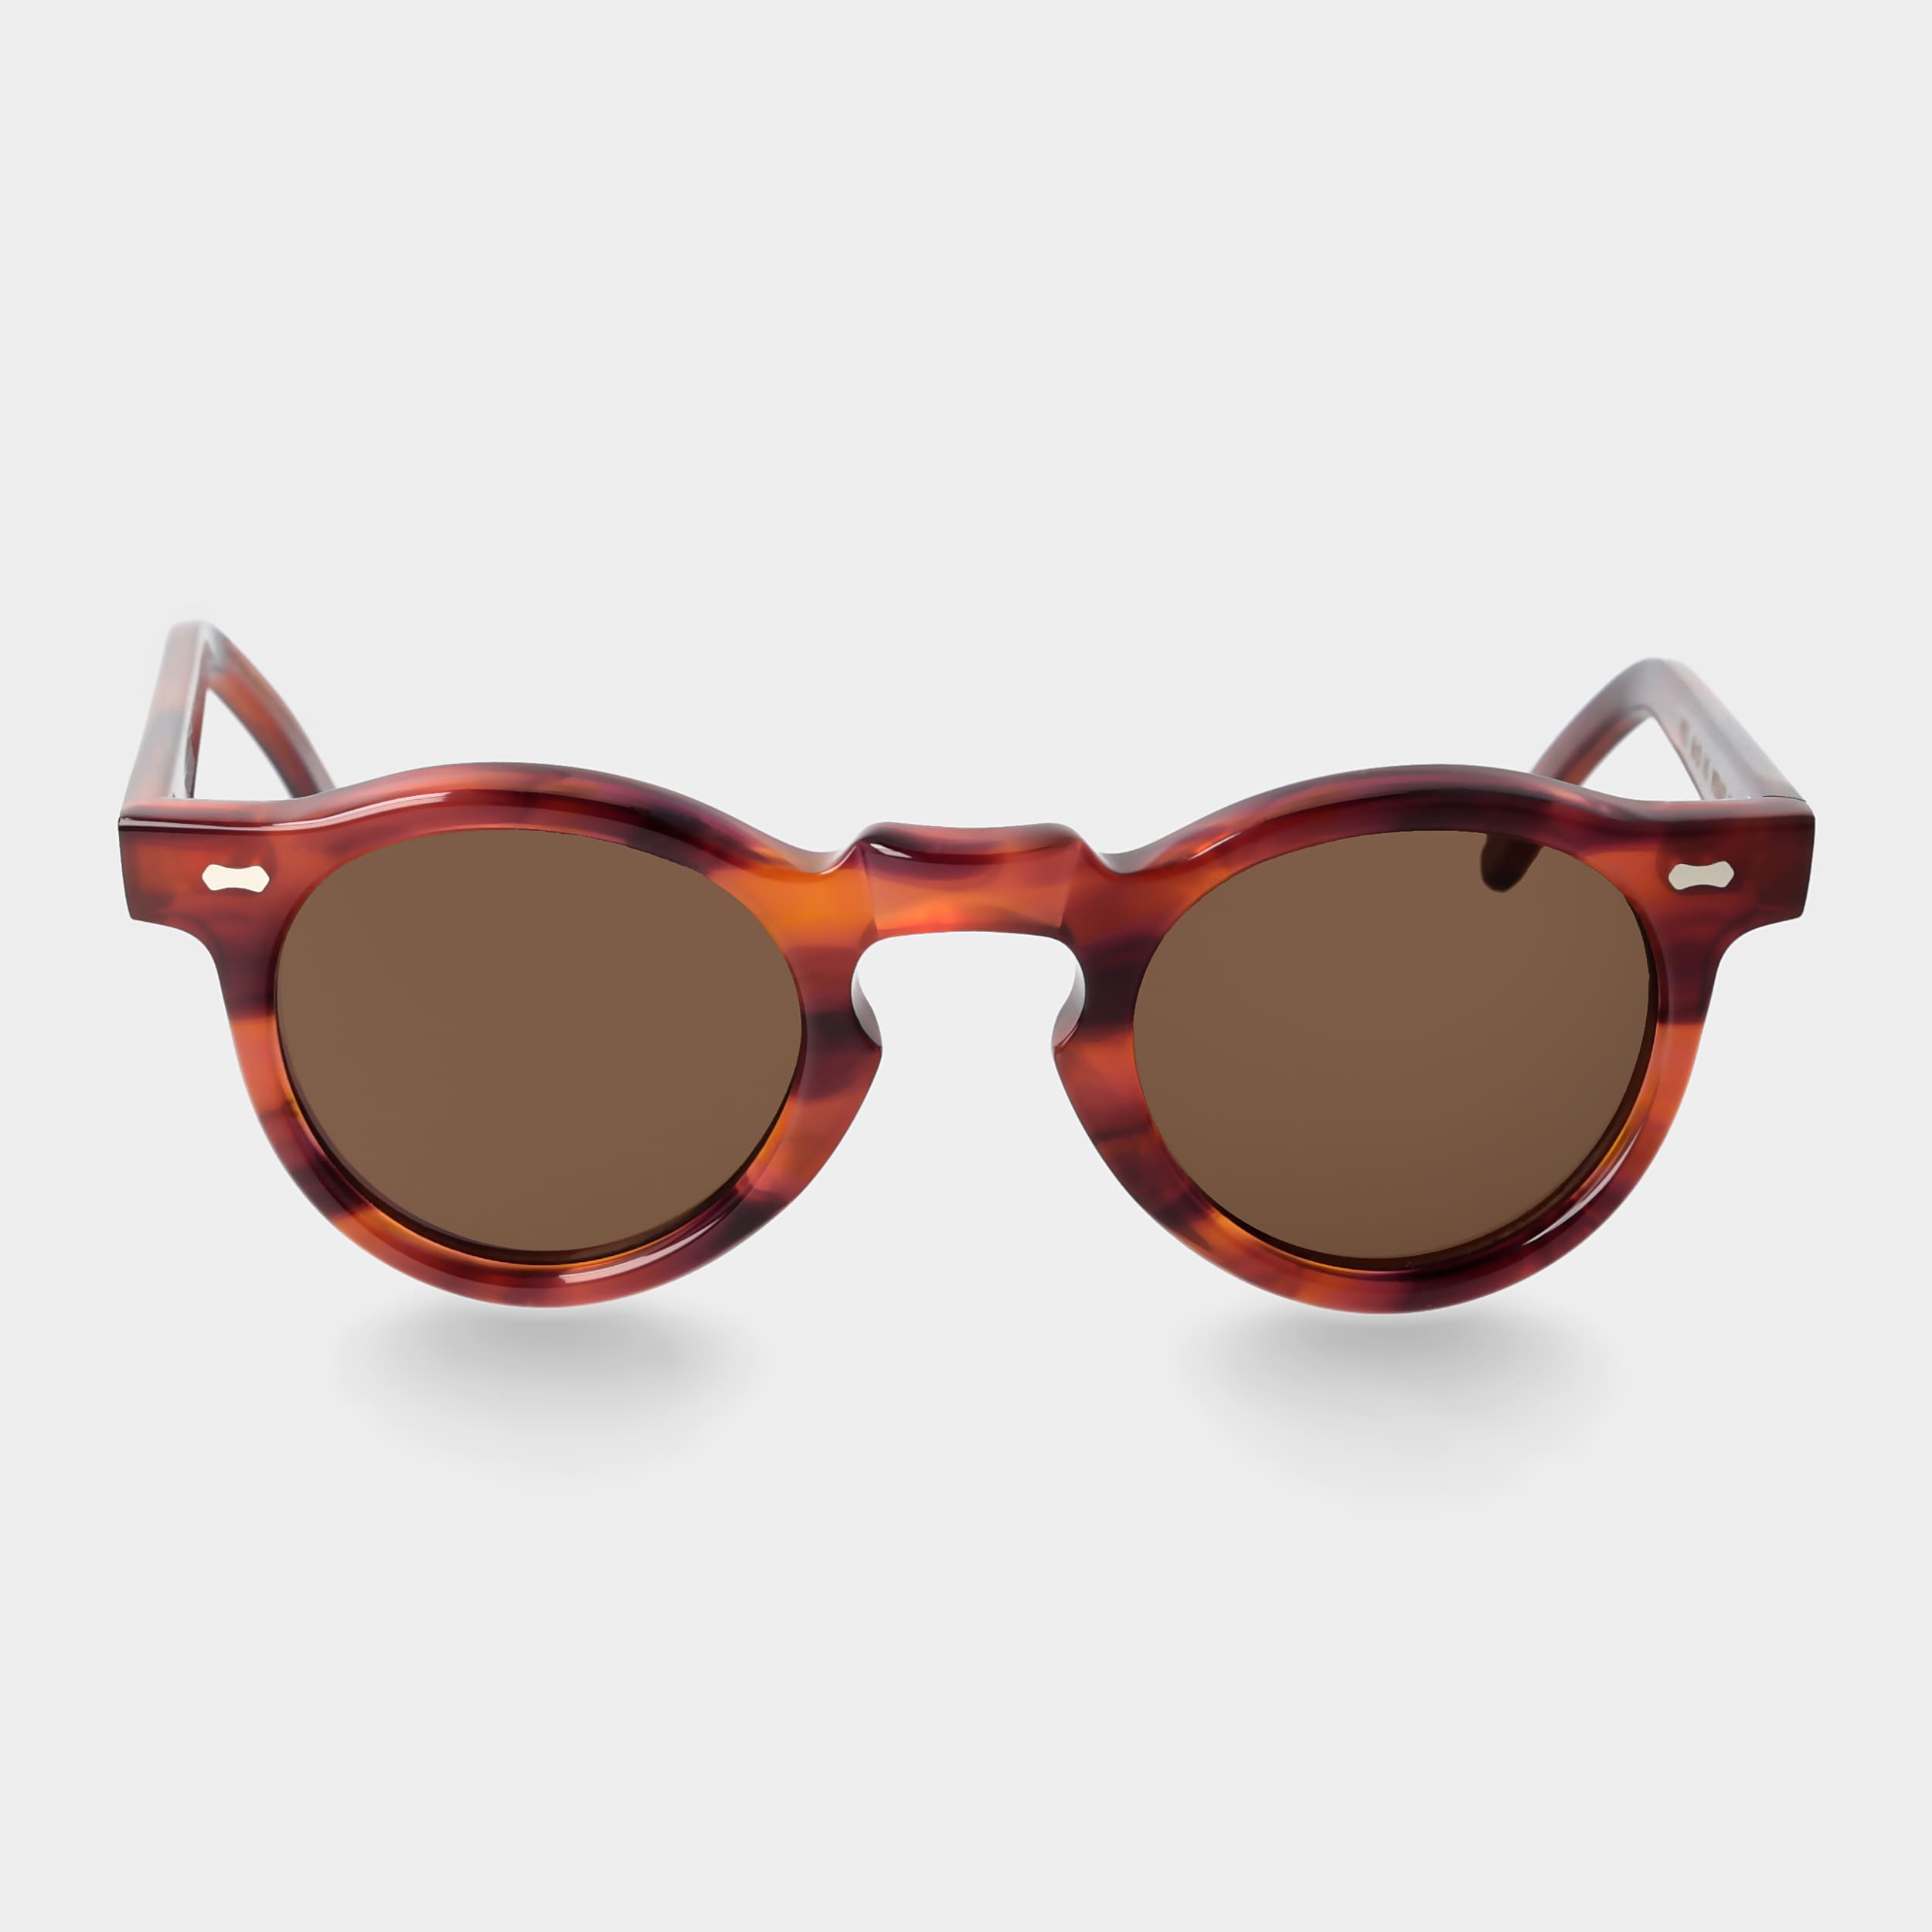 in handmade with Italy Sunglasses Eyewear Lenses, TBD Brown |